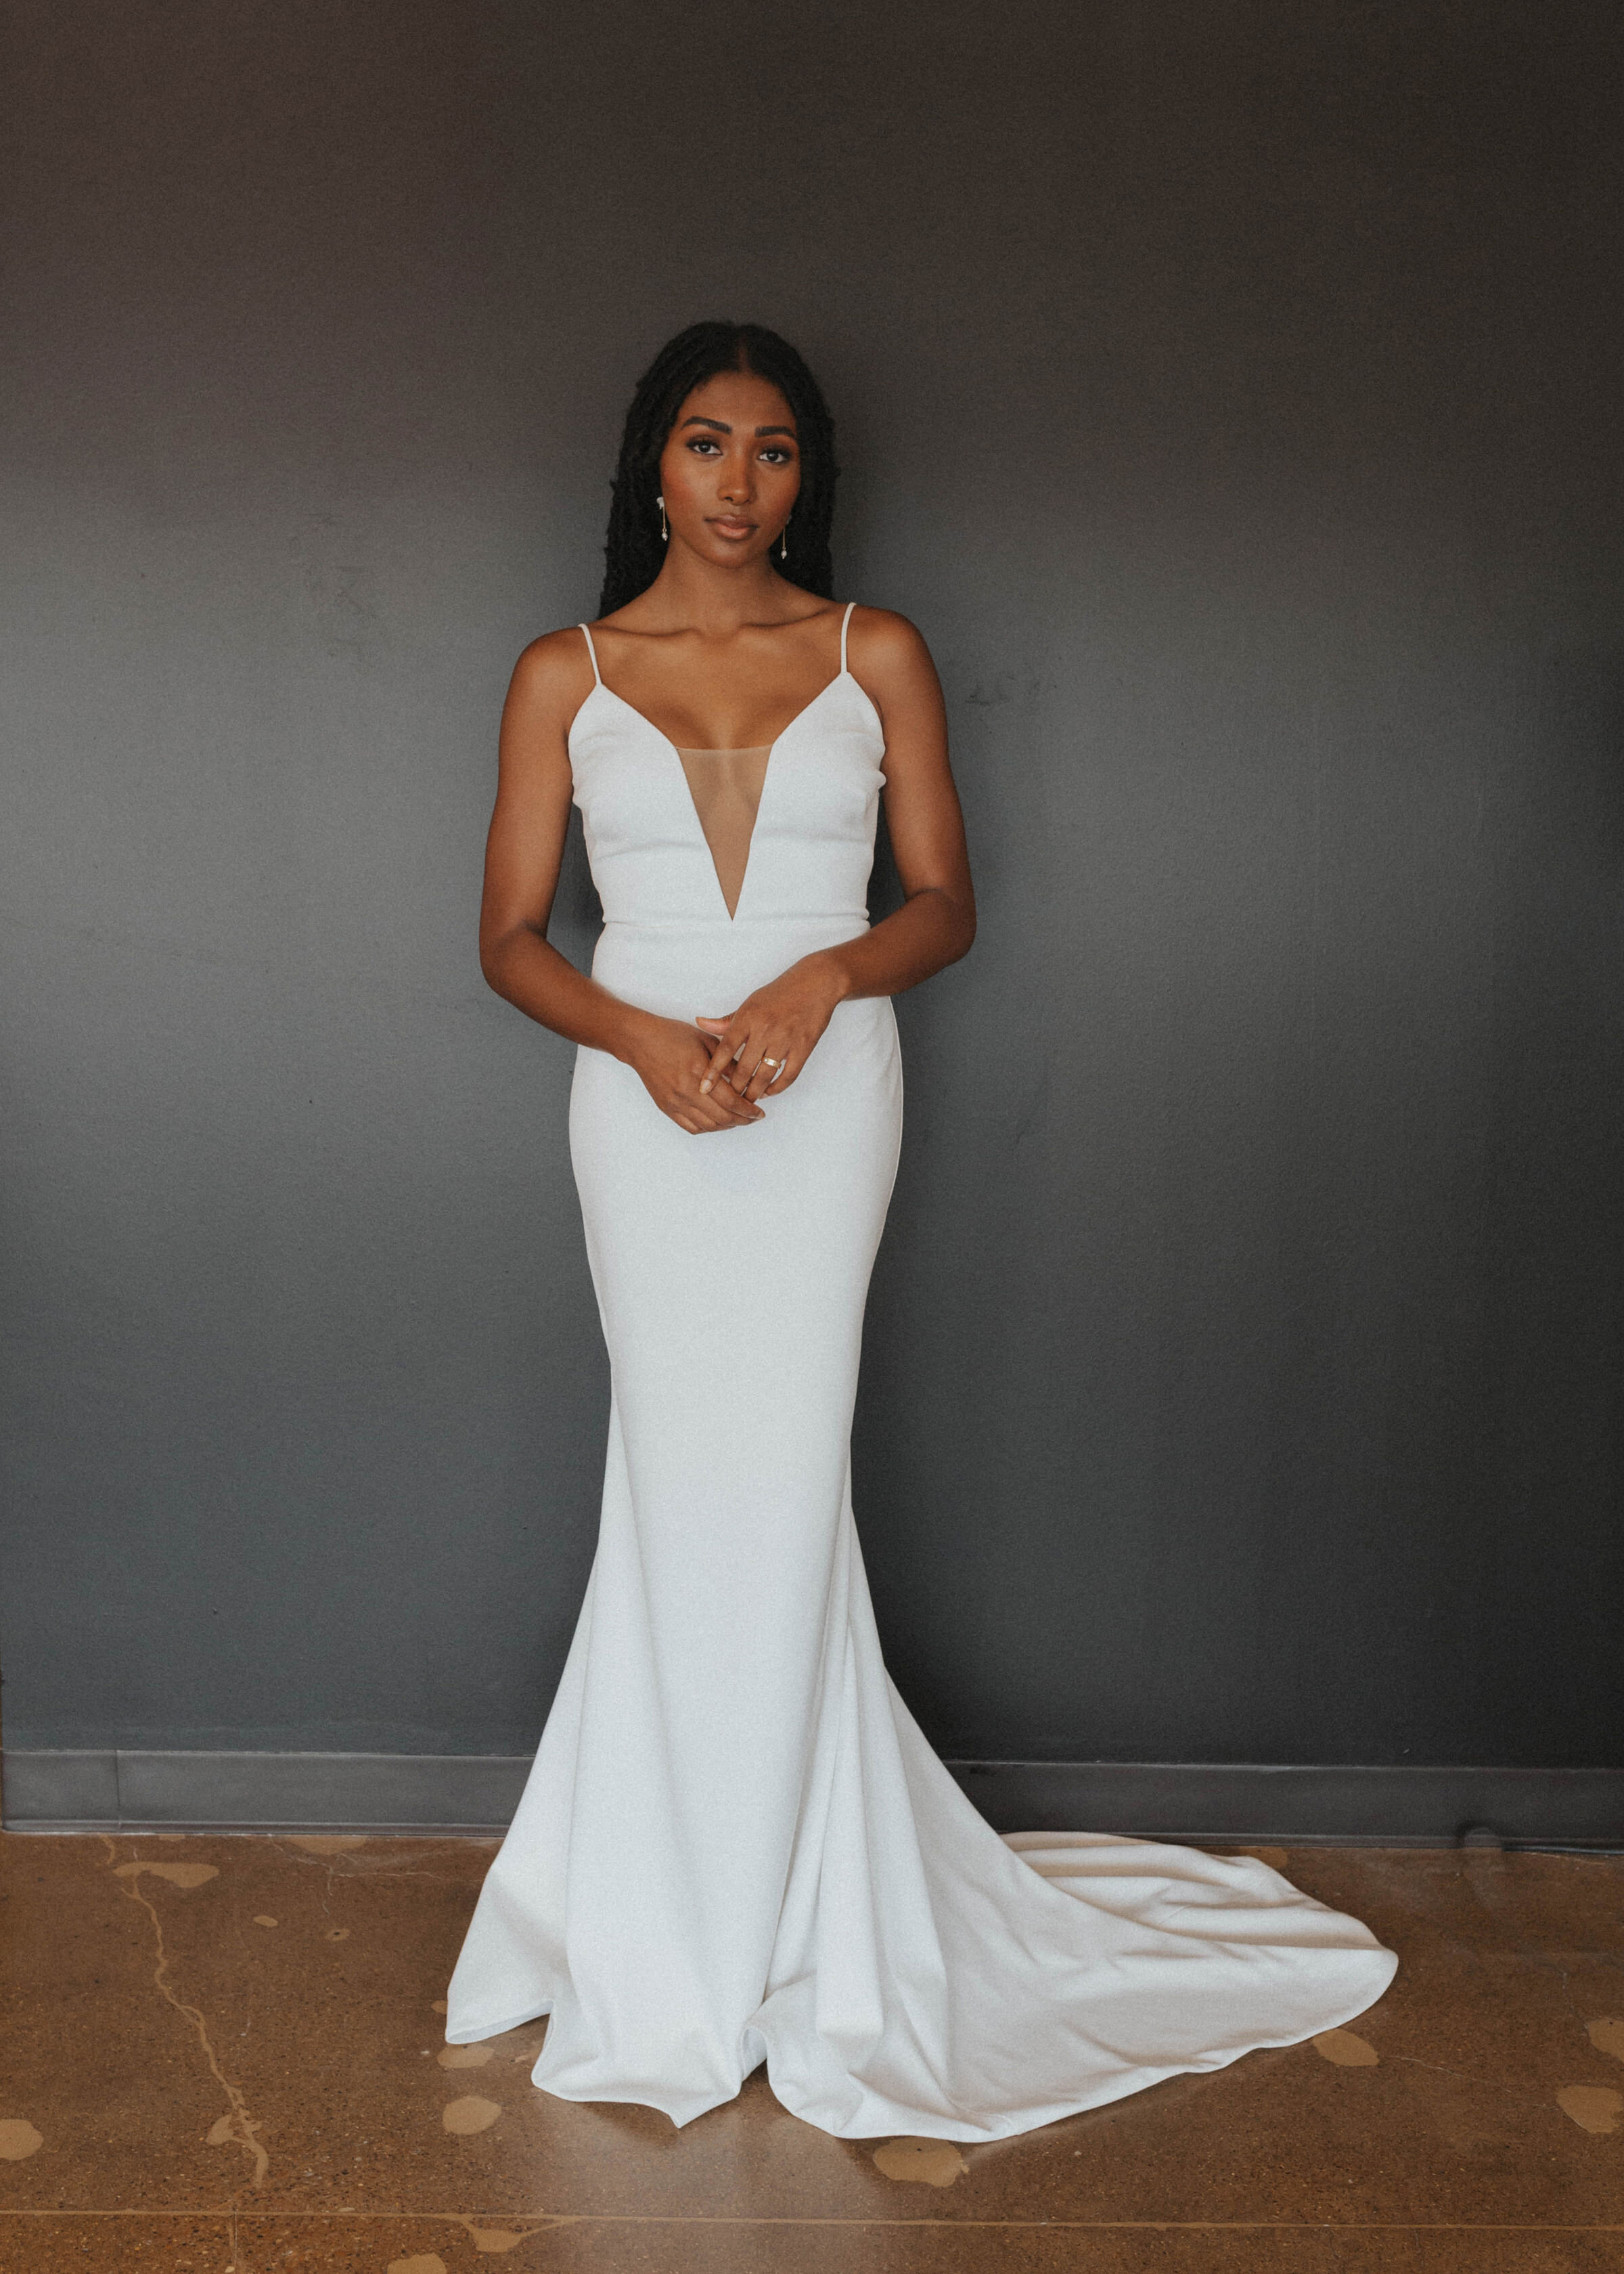 How To Choose A Wedding Dress Silhouette｜a&bé bridal shop